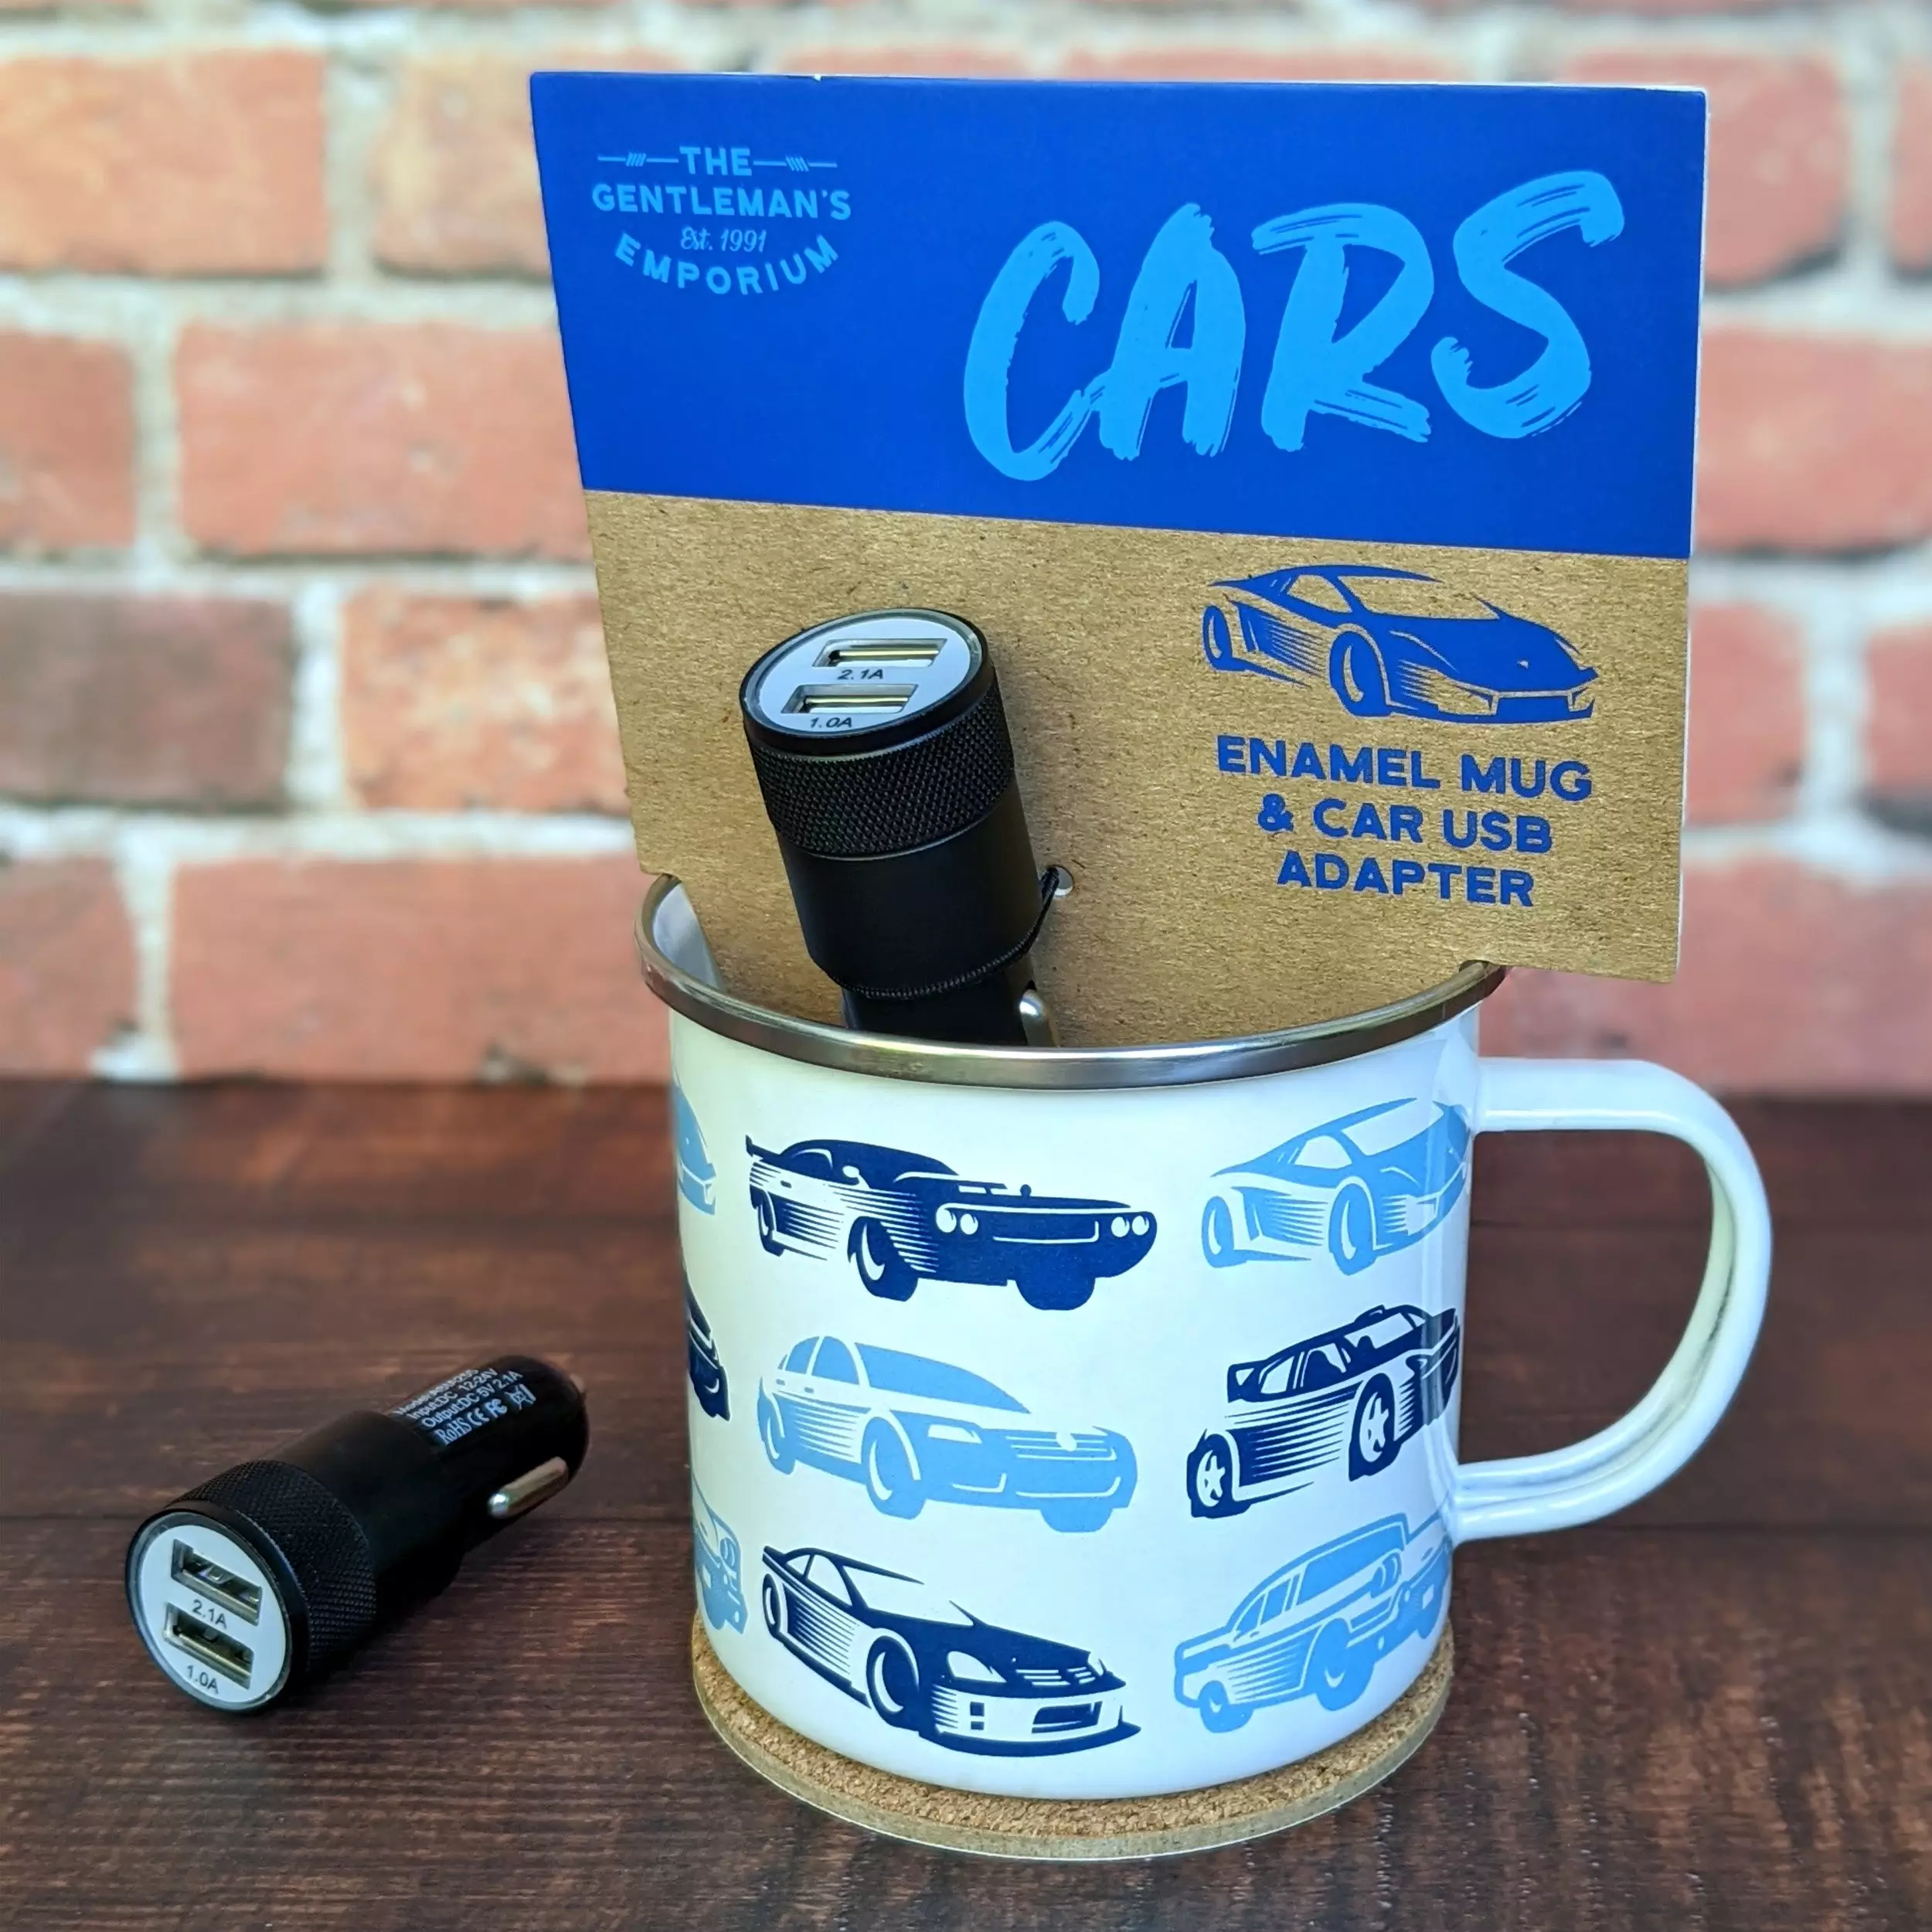 Enamel Mug & Car USB Adapter - The Gentleman's Emporium Cars